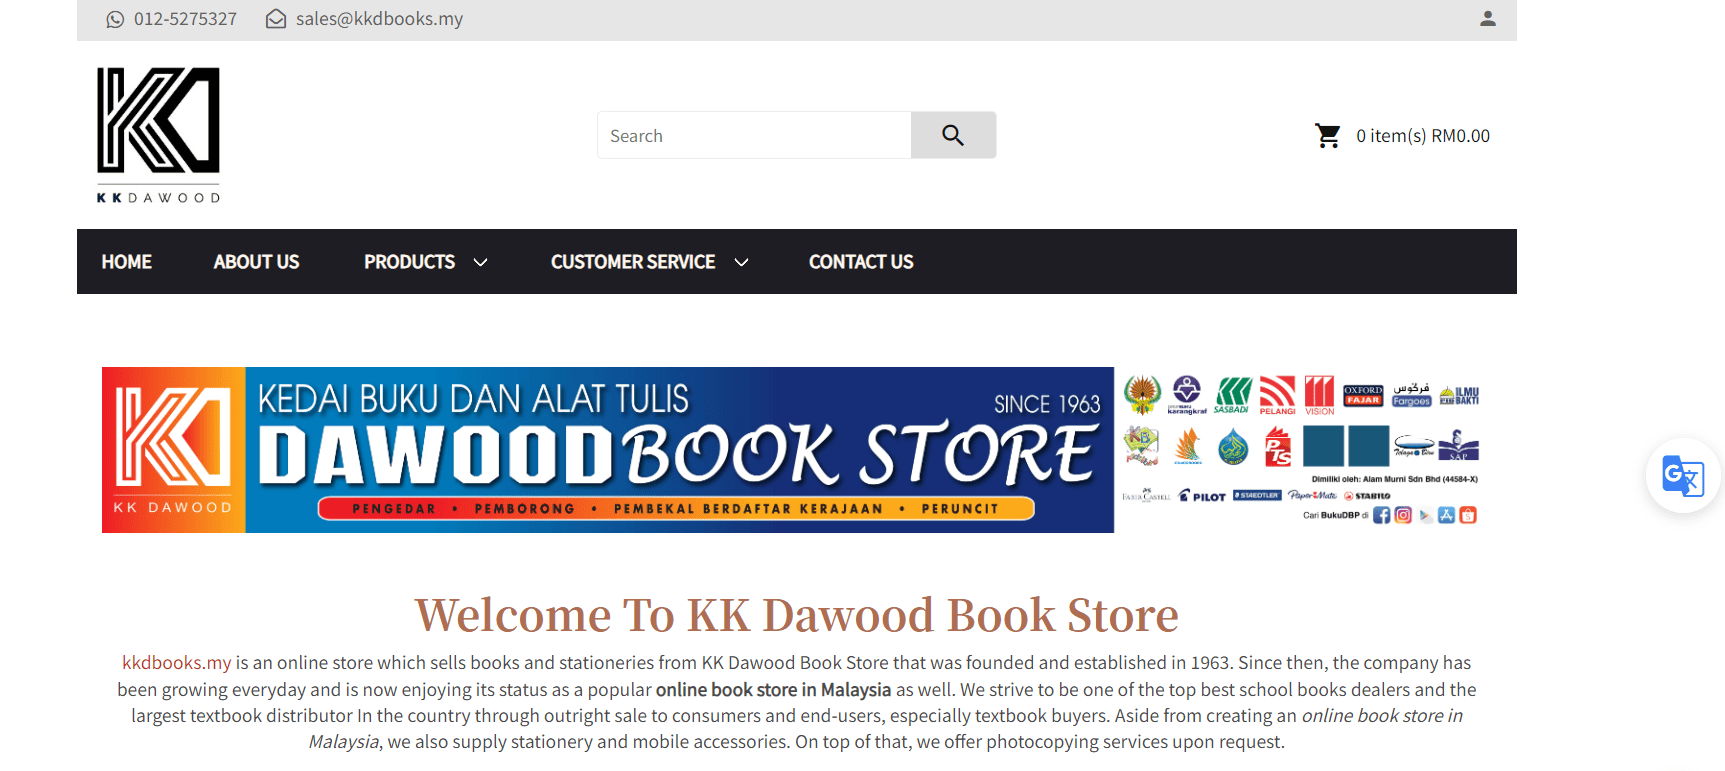 KK Darwood Bookstore